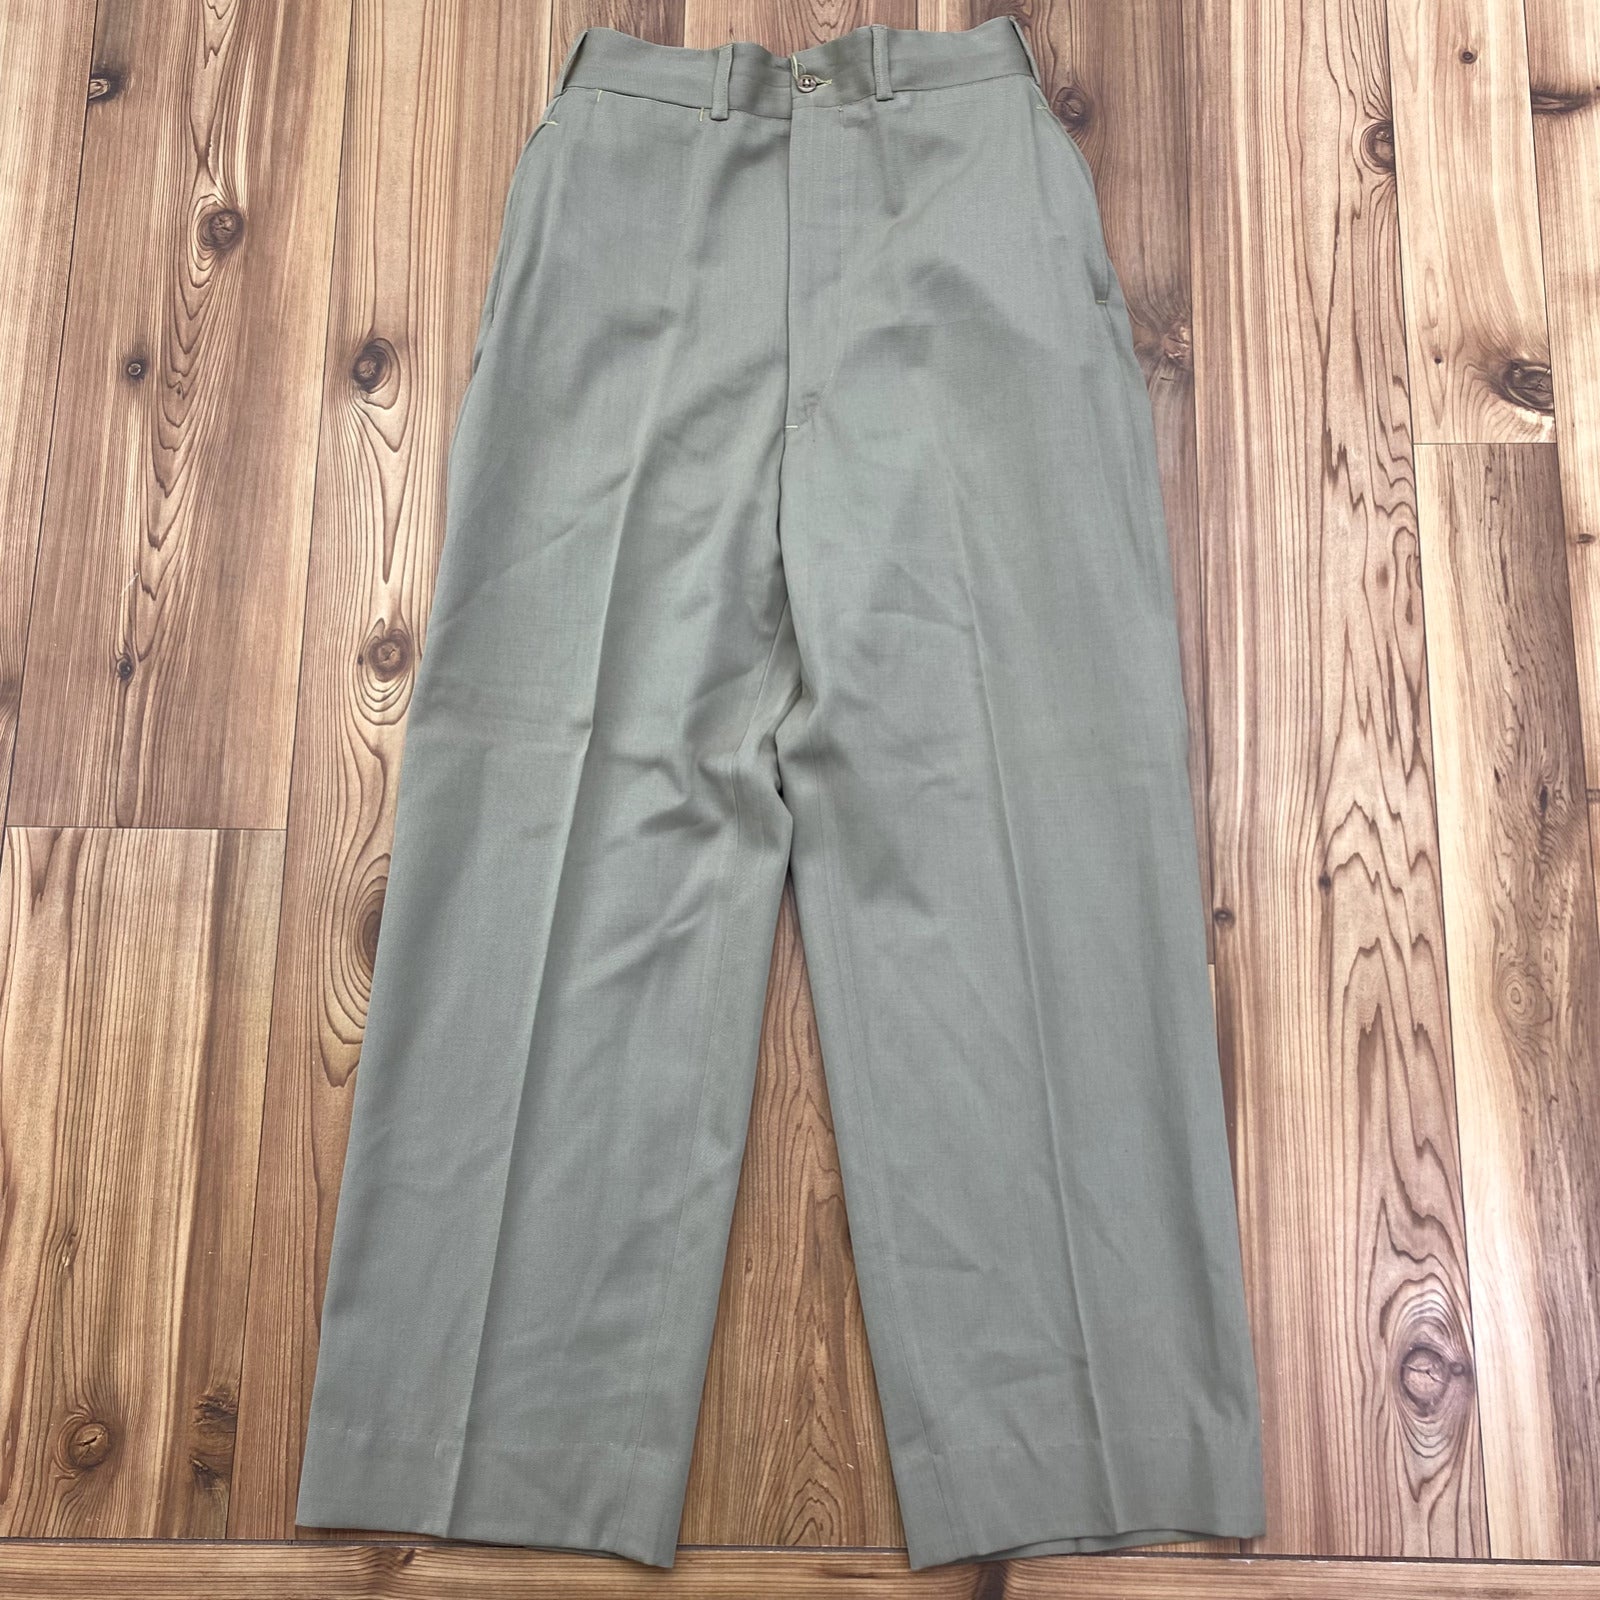 Vintage U.S. Goverment Issue Tan Marine Corp Khaki Twill Uniform Pants 28 x 29